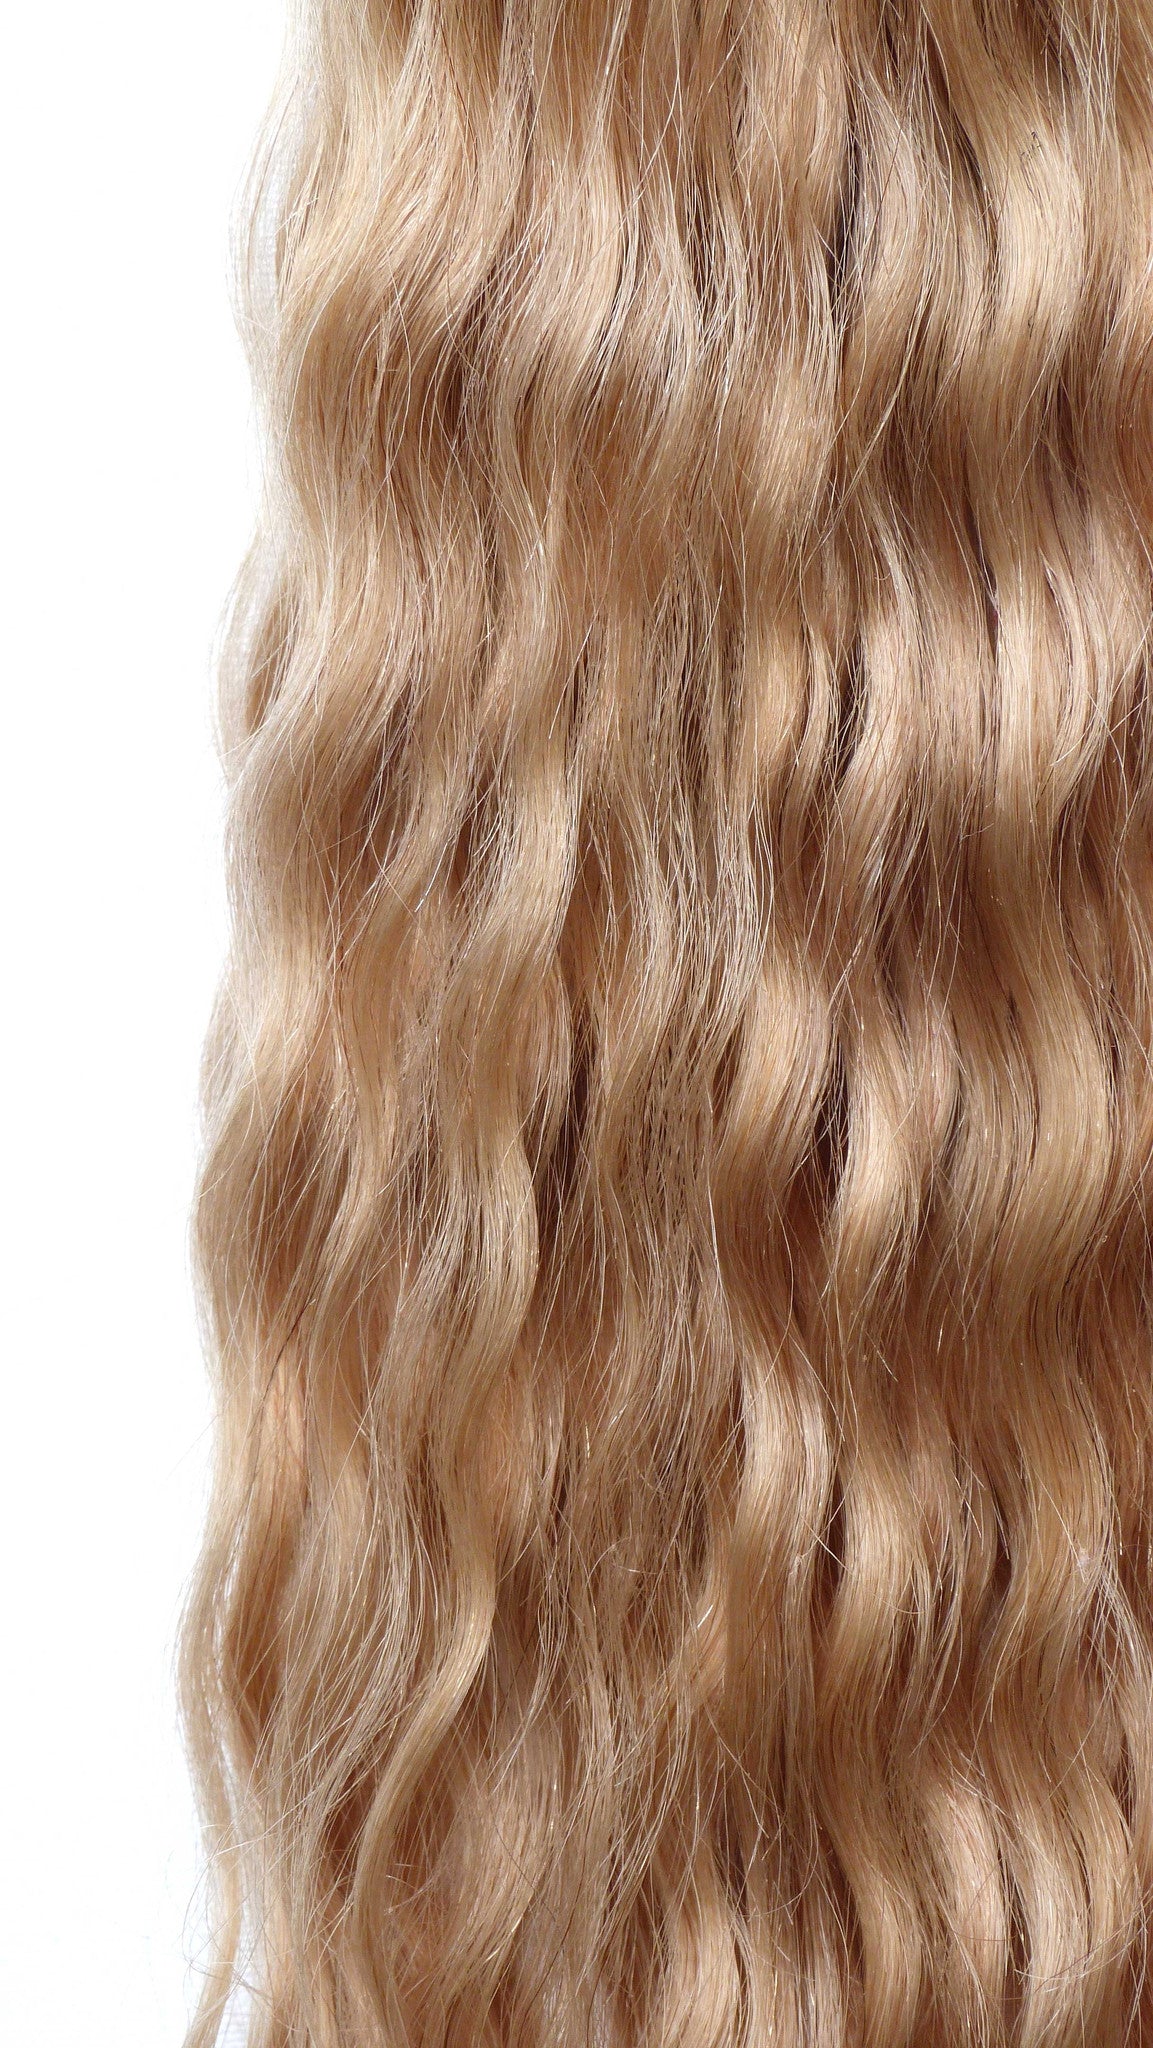 Europäische Echthaarverlängerungen – Micro-Loop-Extensions – Virgin Hair & Beauty, die besten Haarverlängerungen, echtes Echthaar.